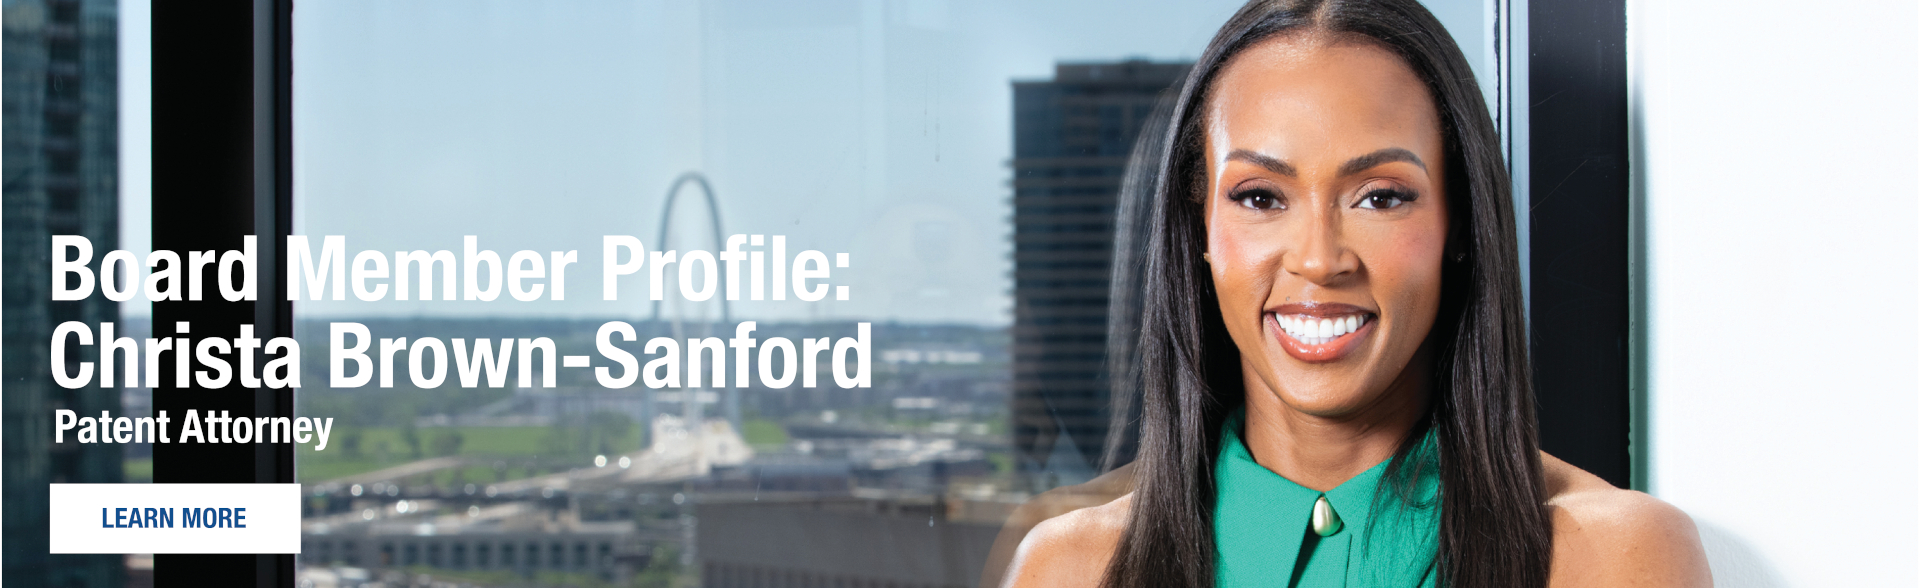 Board Member Profile: Christa Brown-Sanford